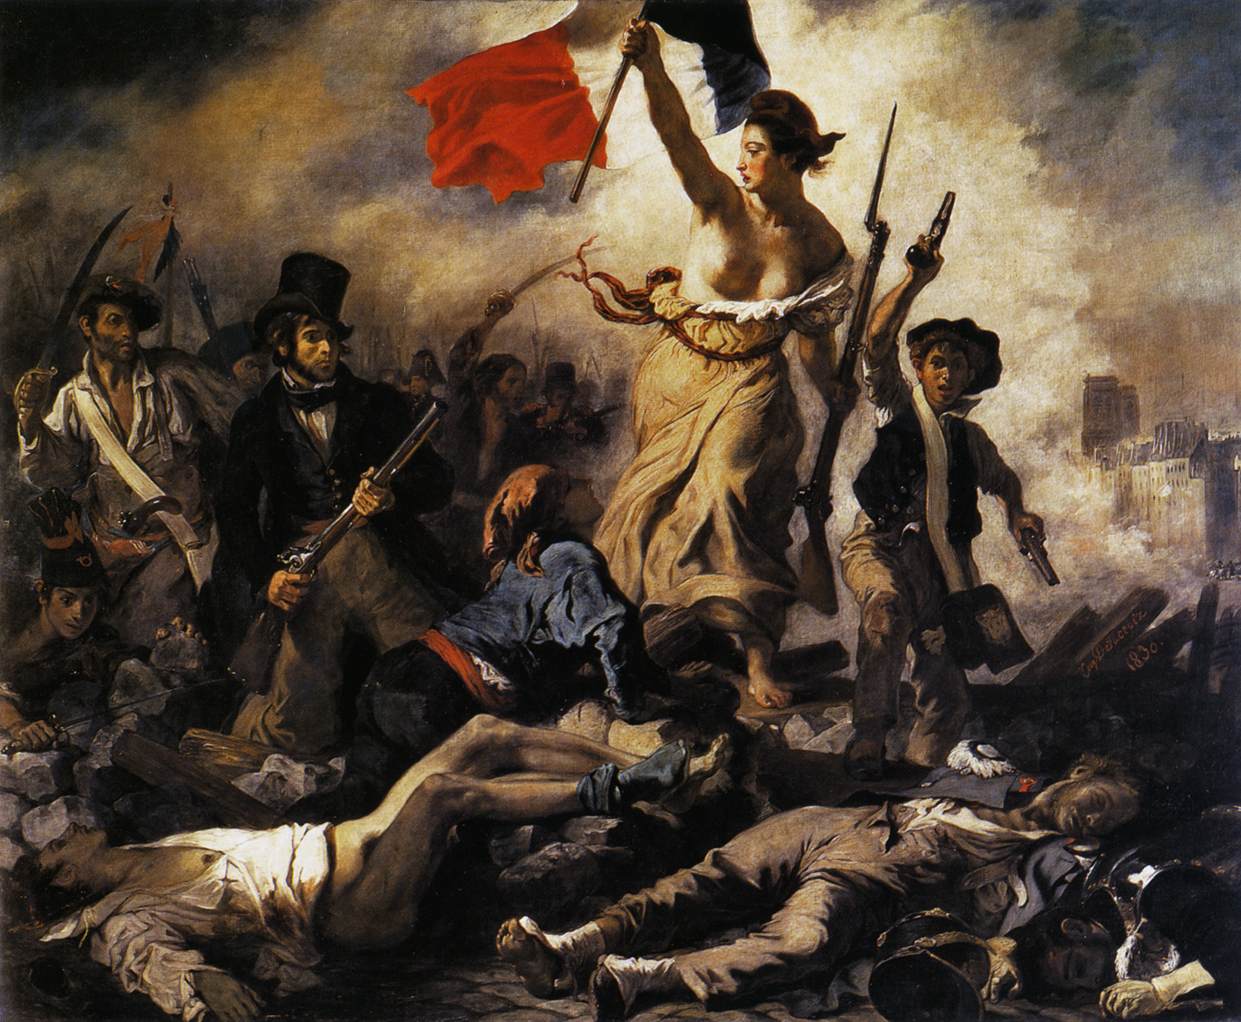 Eugne_Delacroix_-_Liberty_Leading_the_People_28th_July_1830_-_WGA6177.jpg